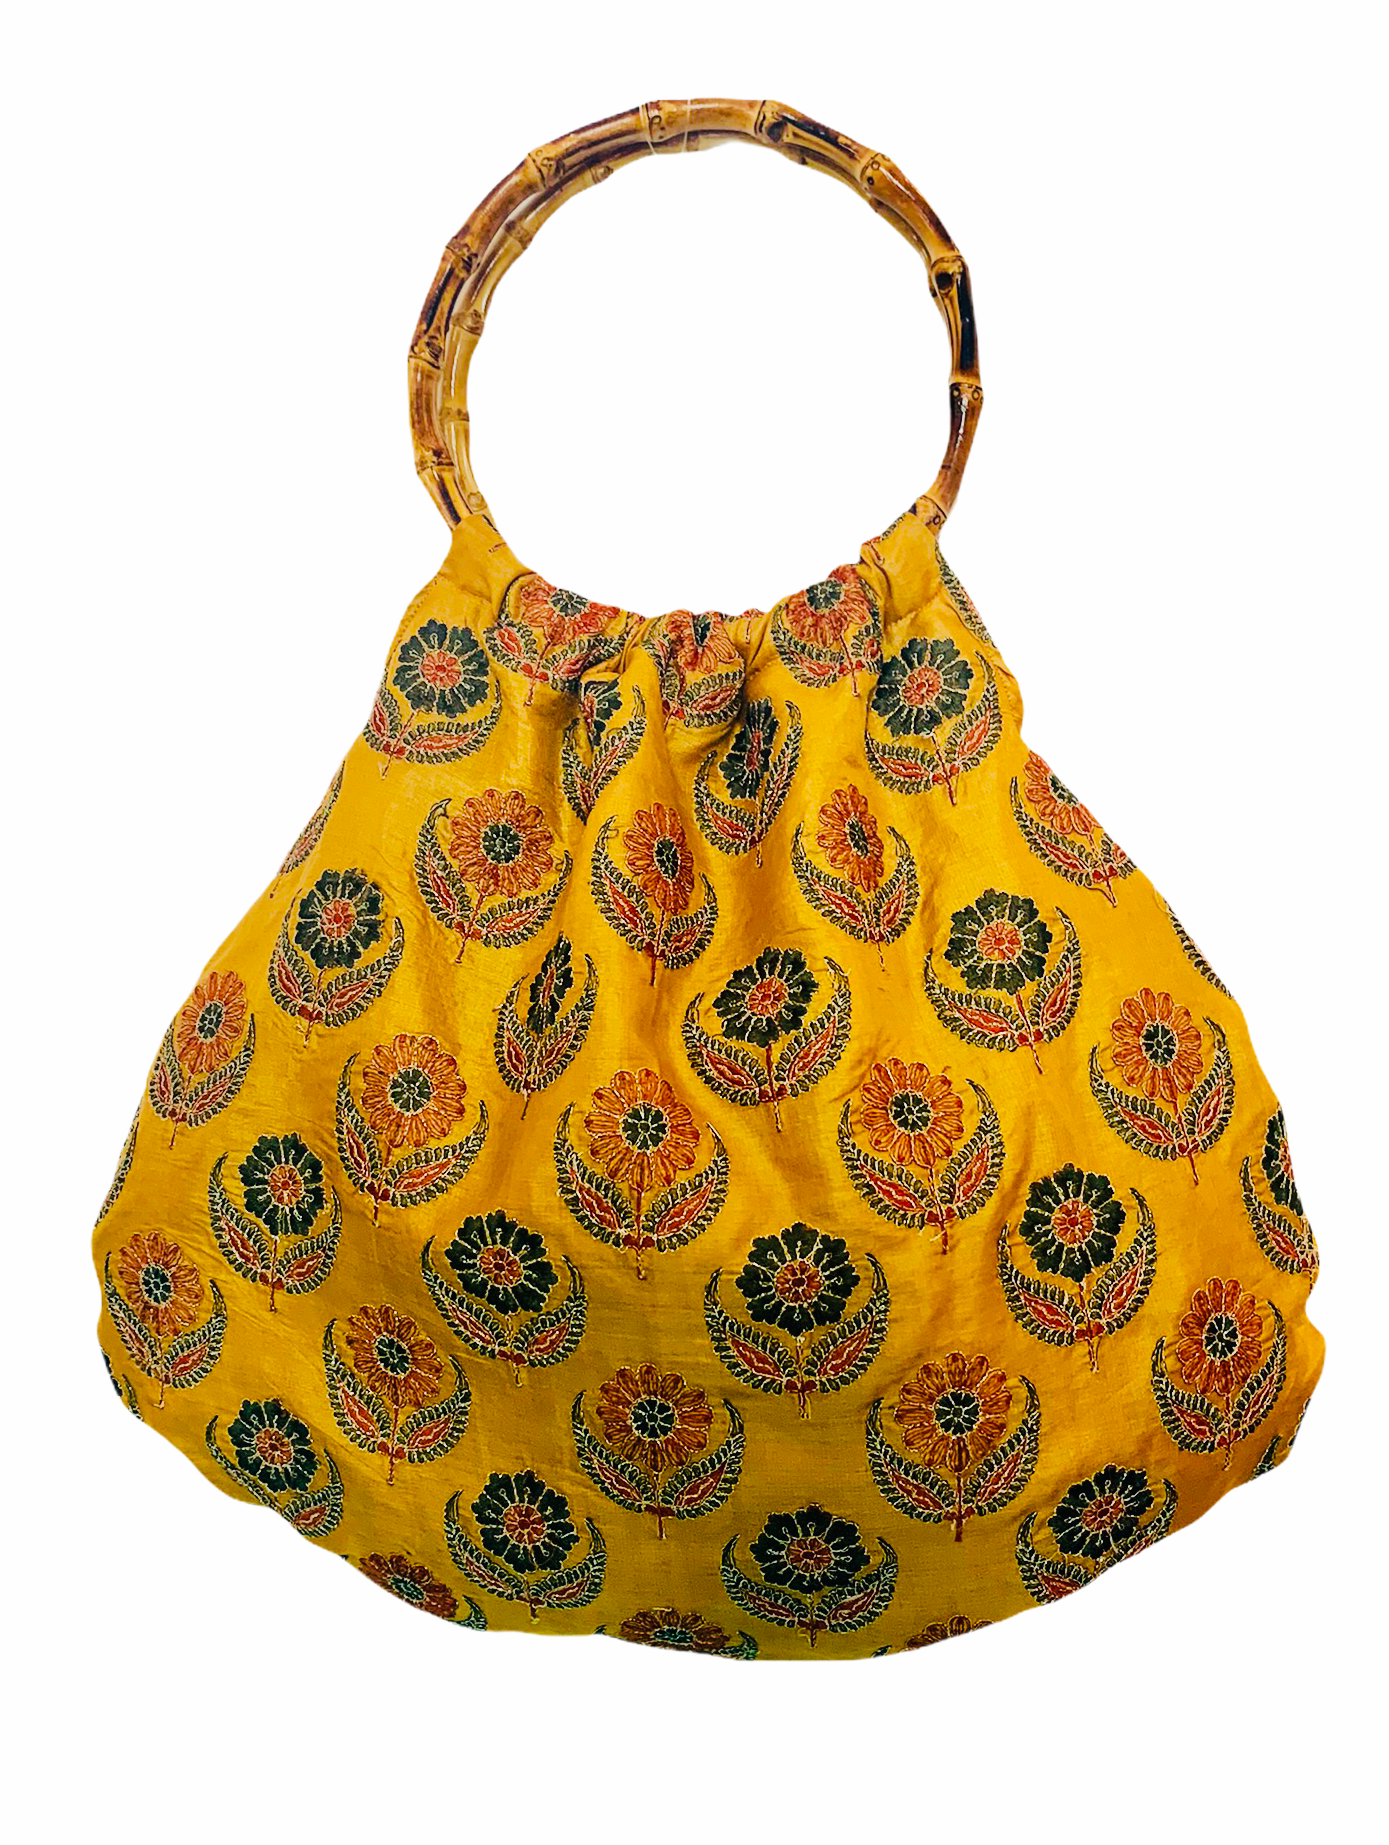 Chrysanthemum Bag